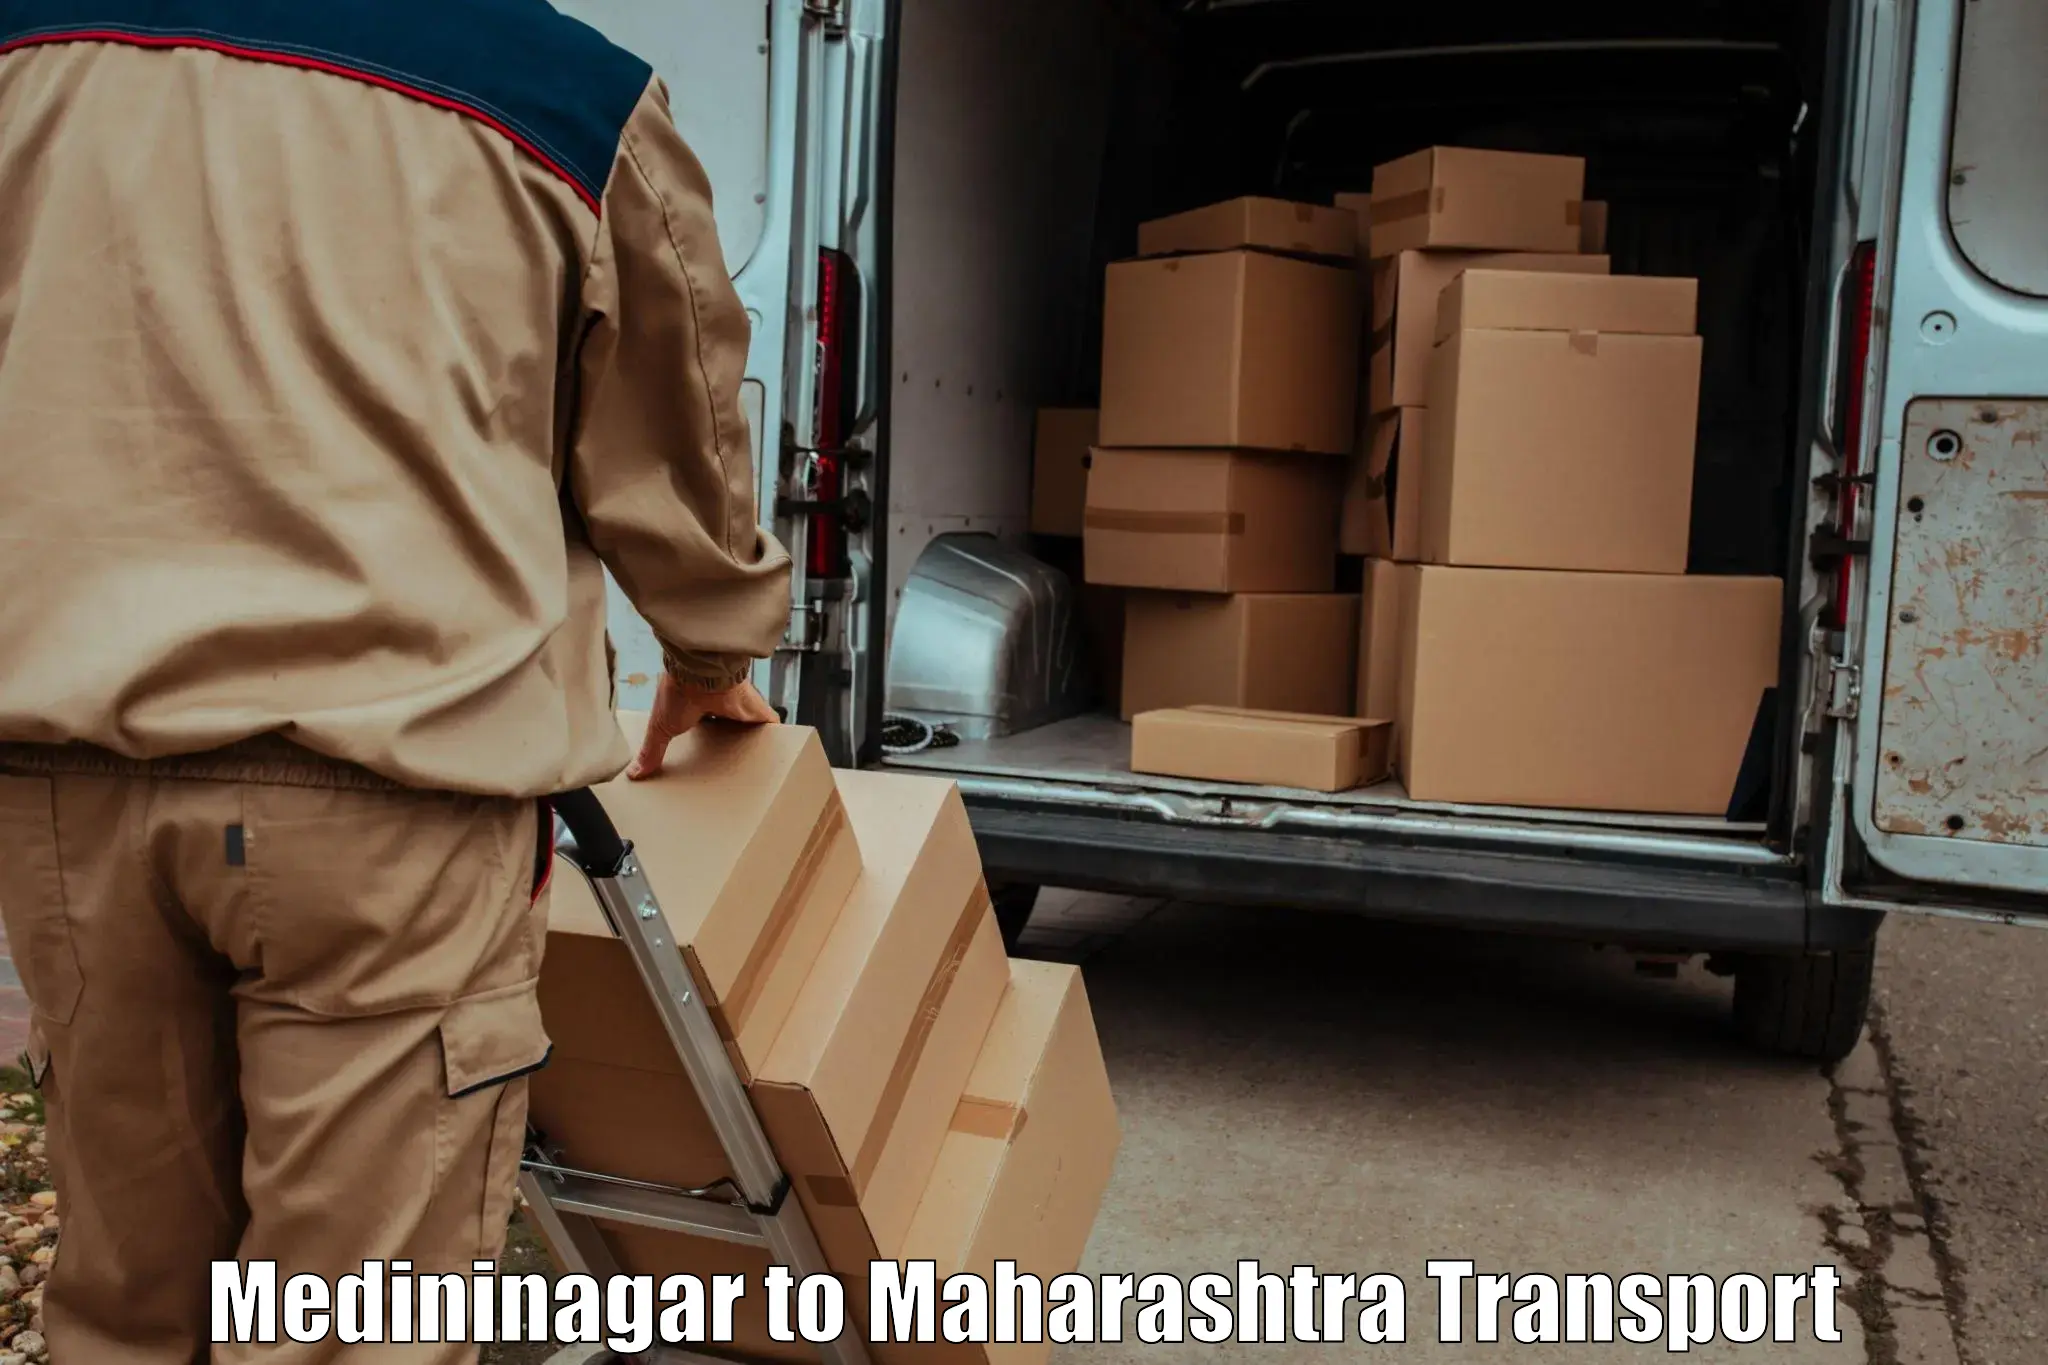 Bike transfer in Medininagar to Mahabaleshwar